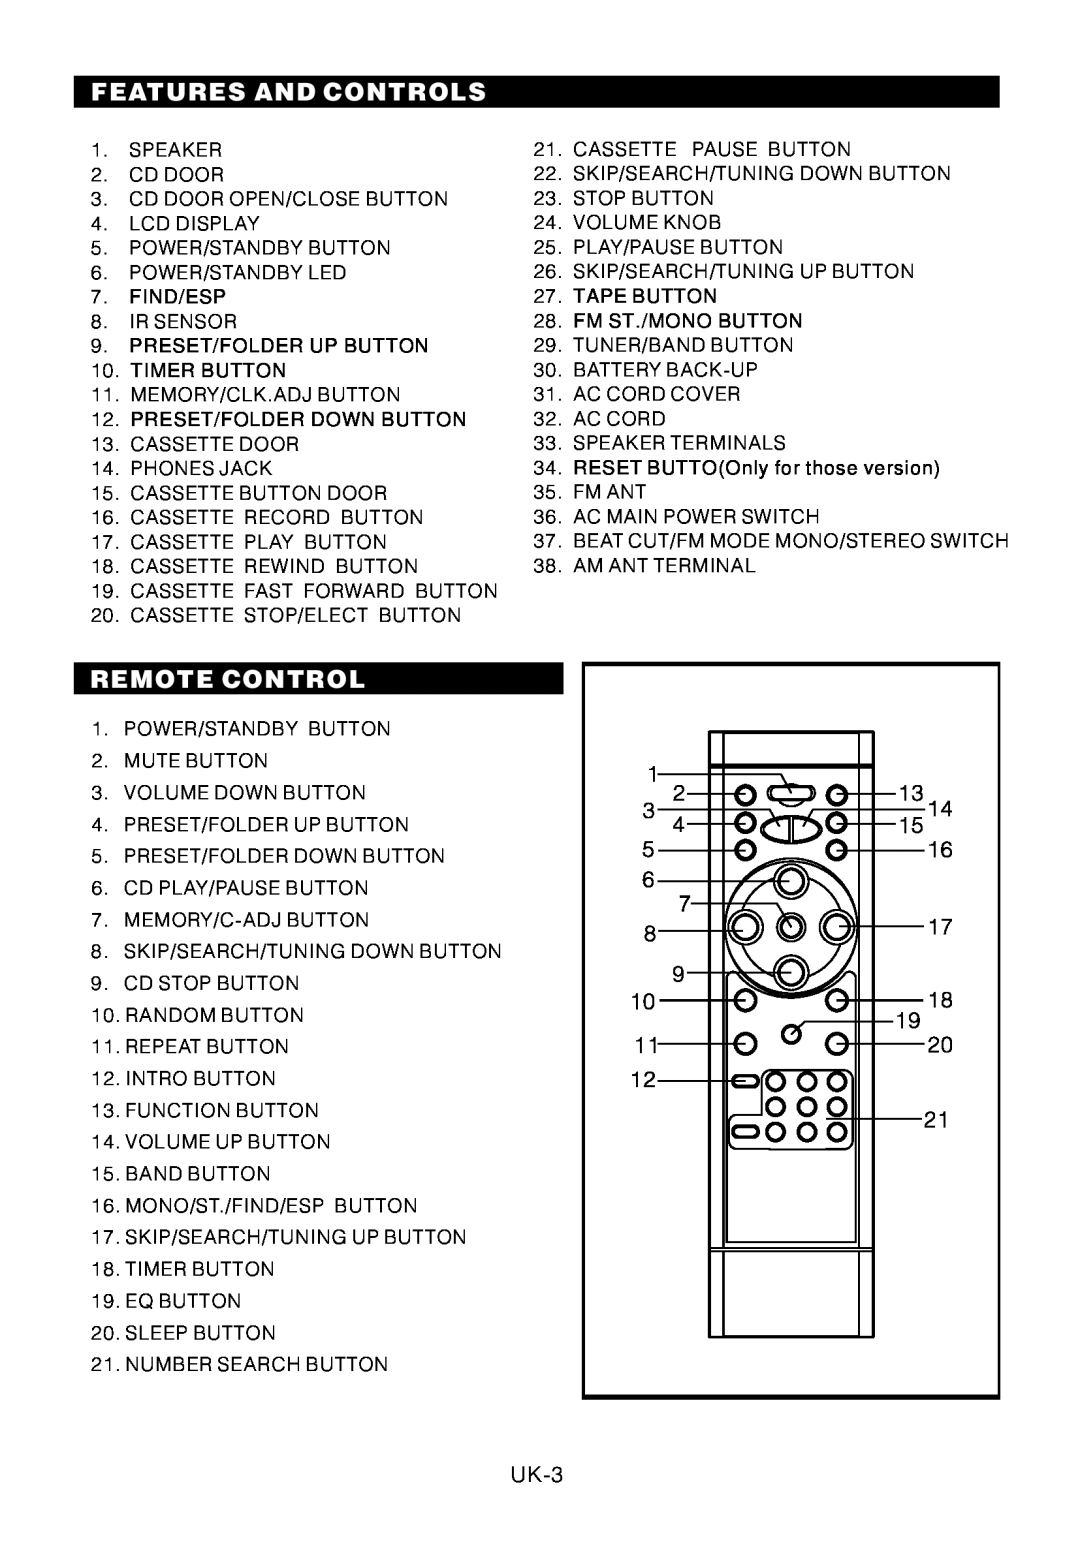 Motorola BSA-1520 instruction manual Remote Control, UK-3, Features And Controls 